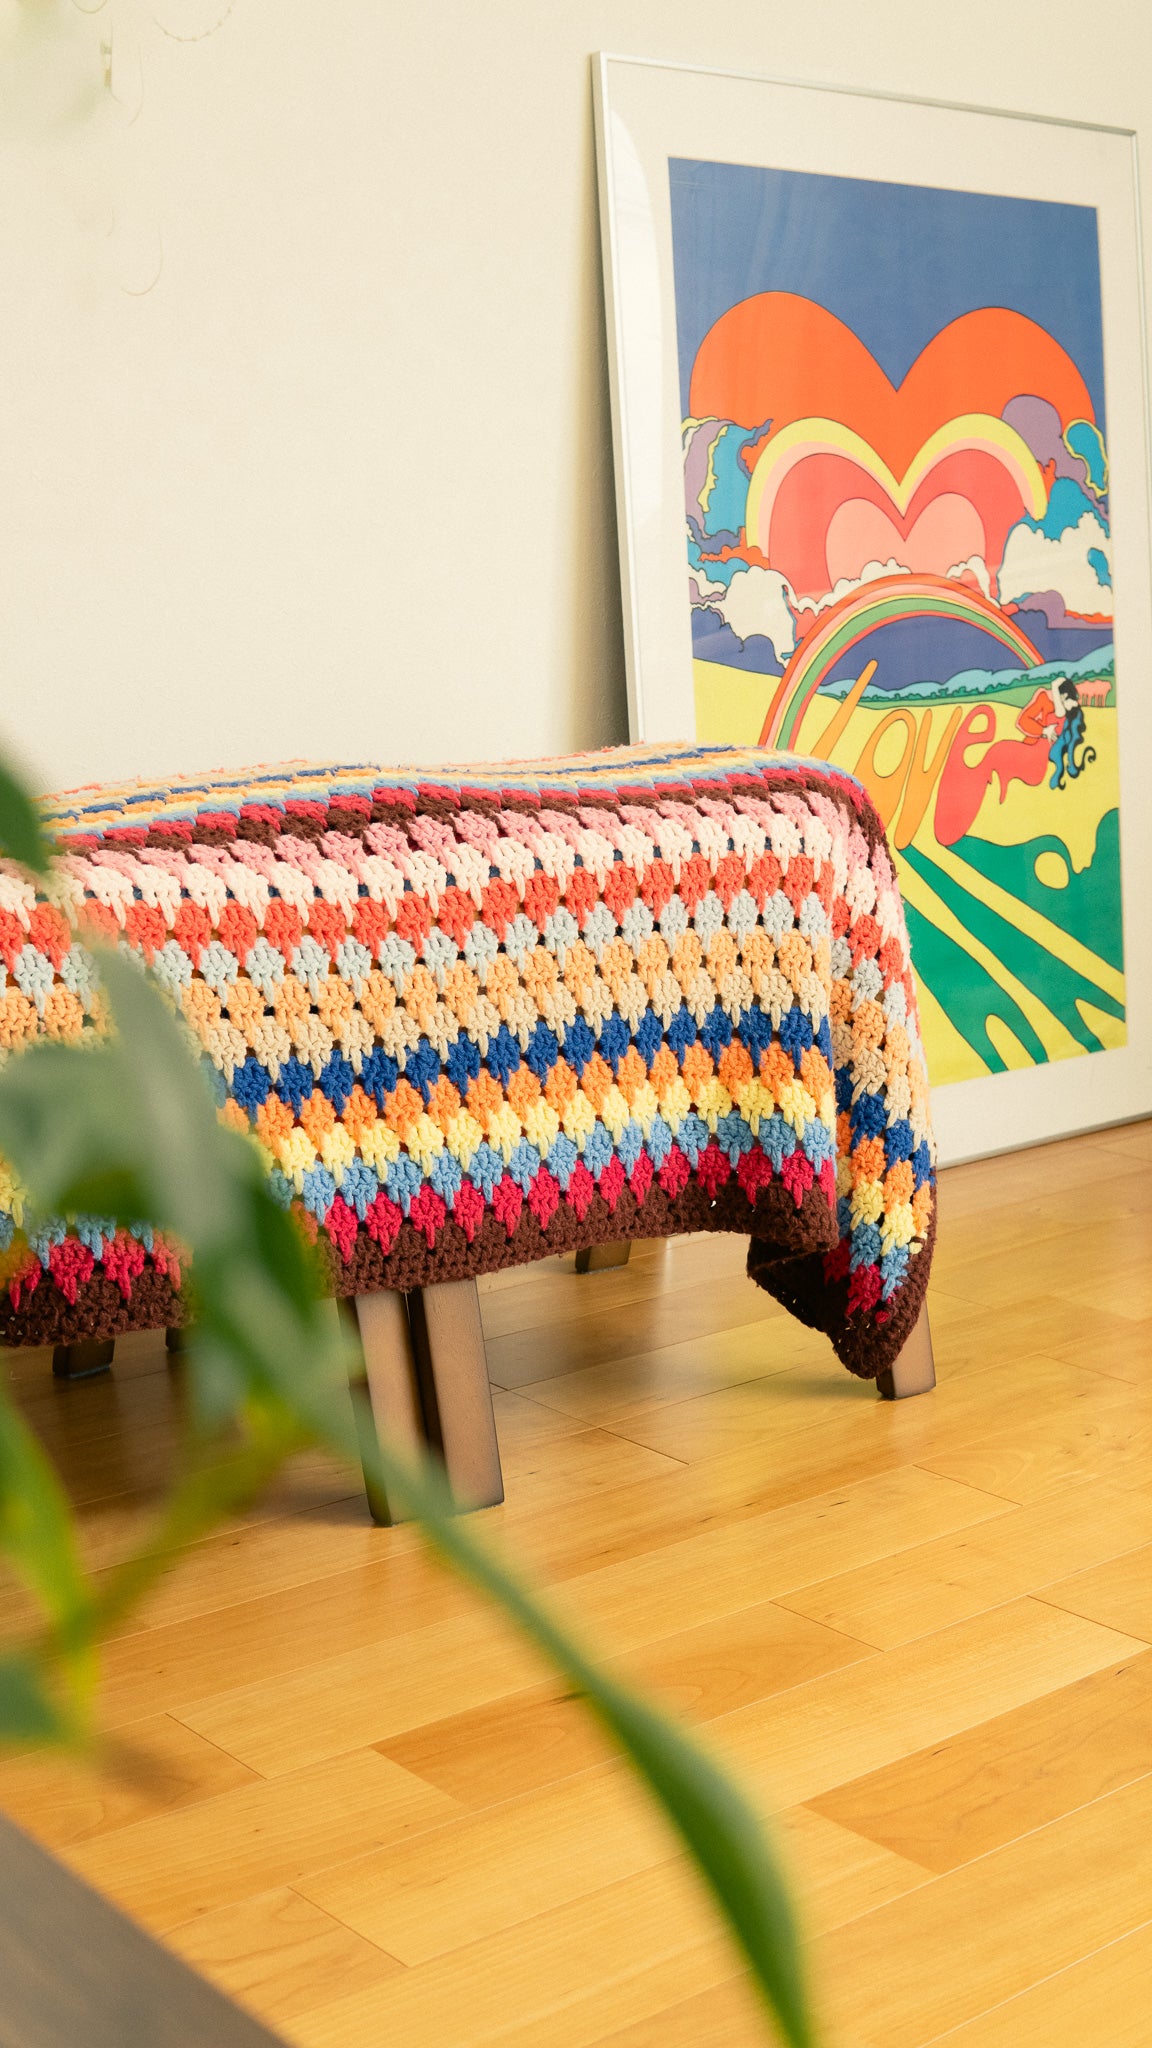 Big Size Colorful Knit Granny Square Blanket